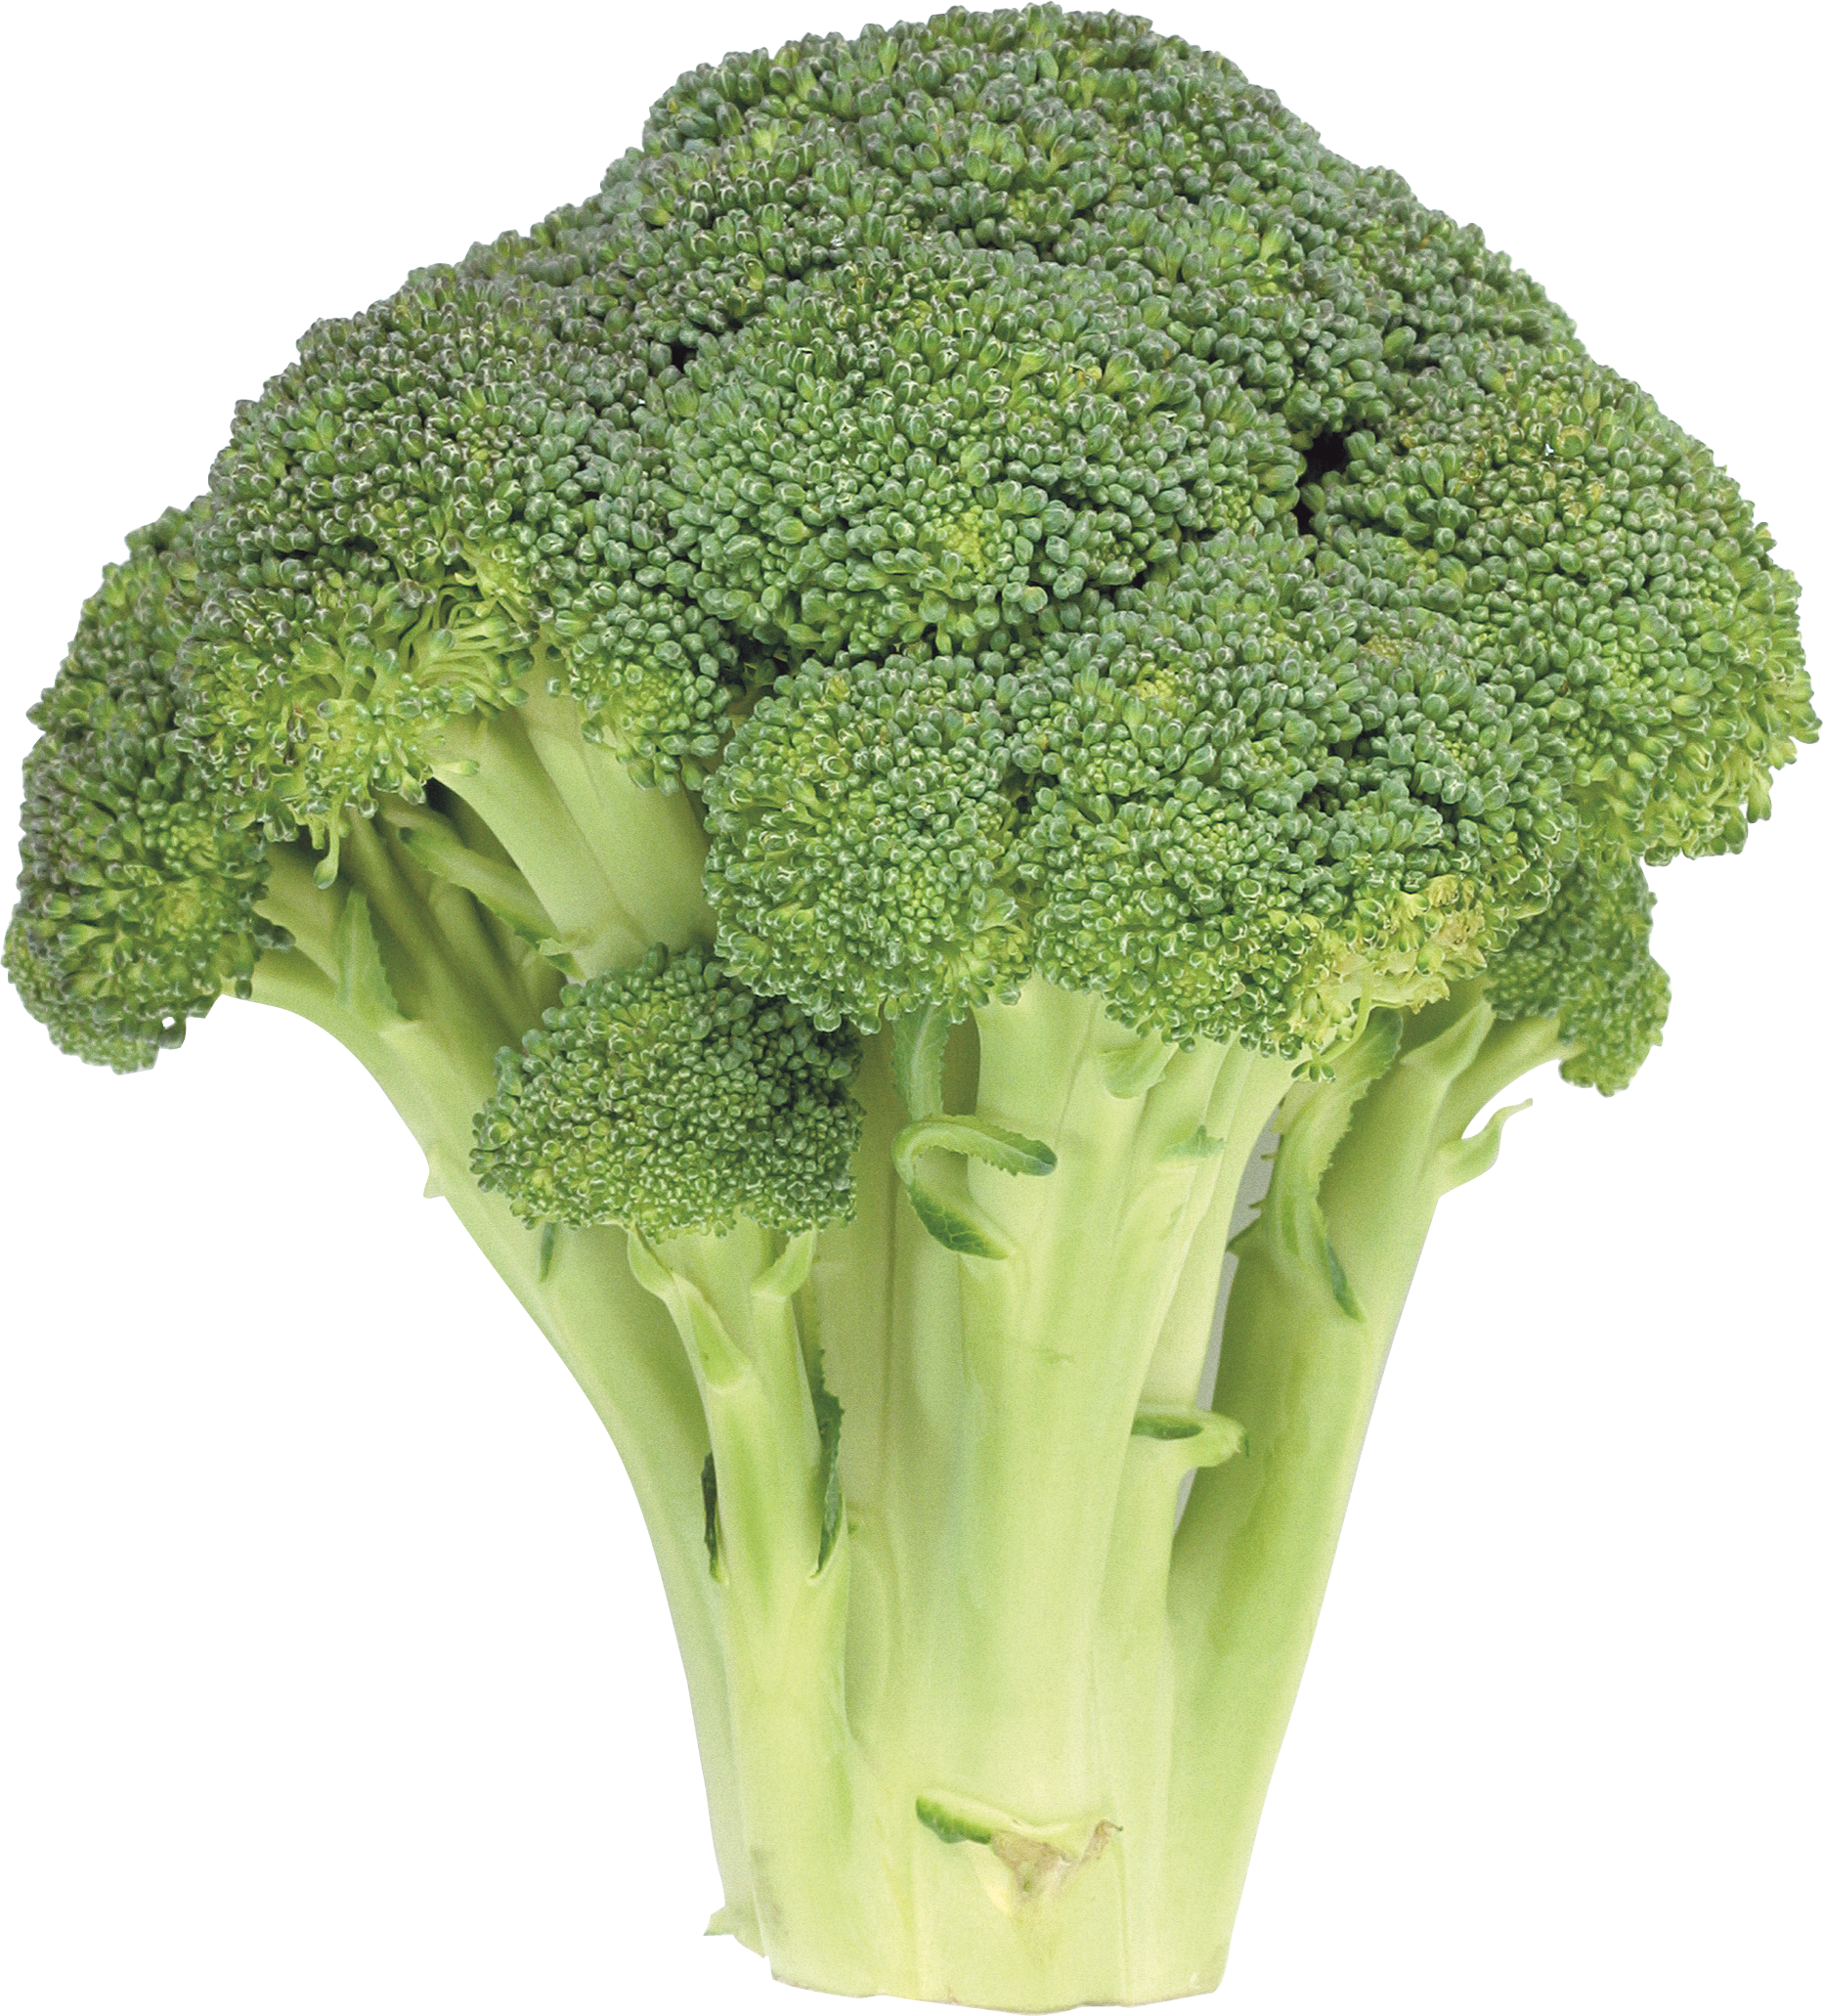 Download Png Image  Broccoli Png Image